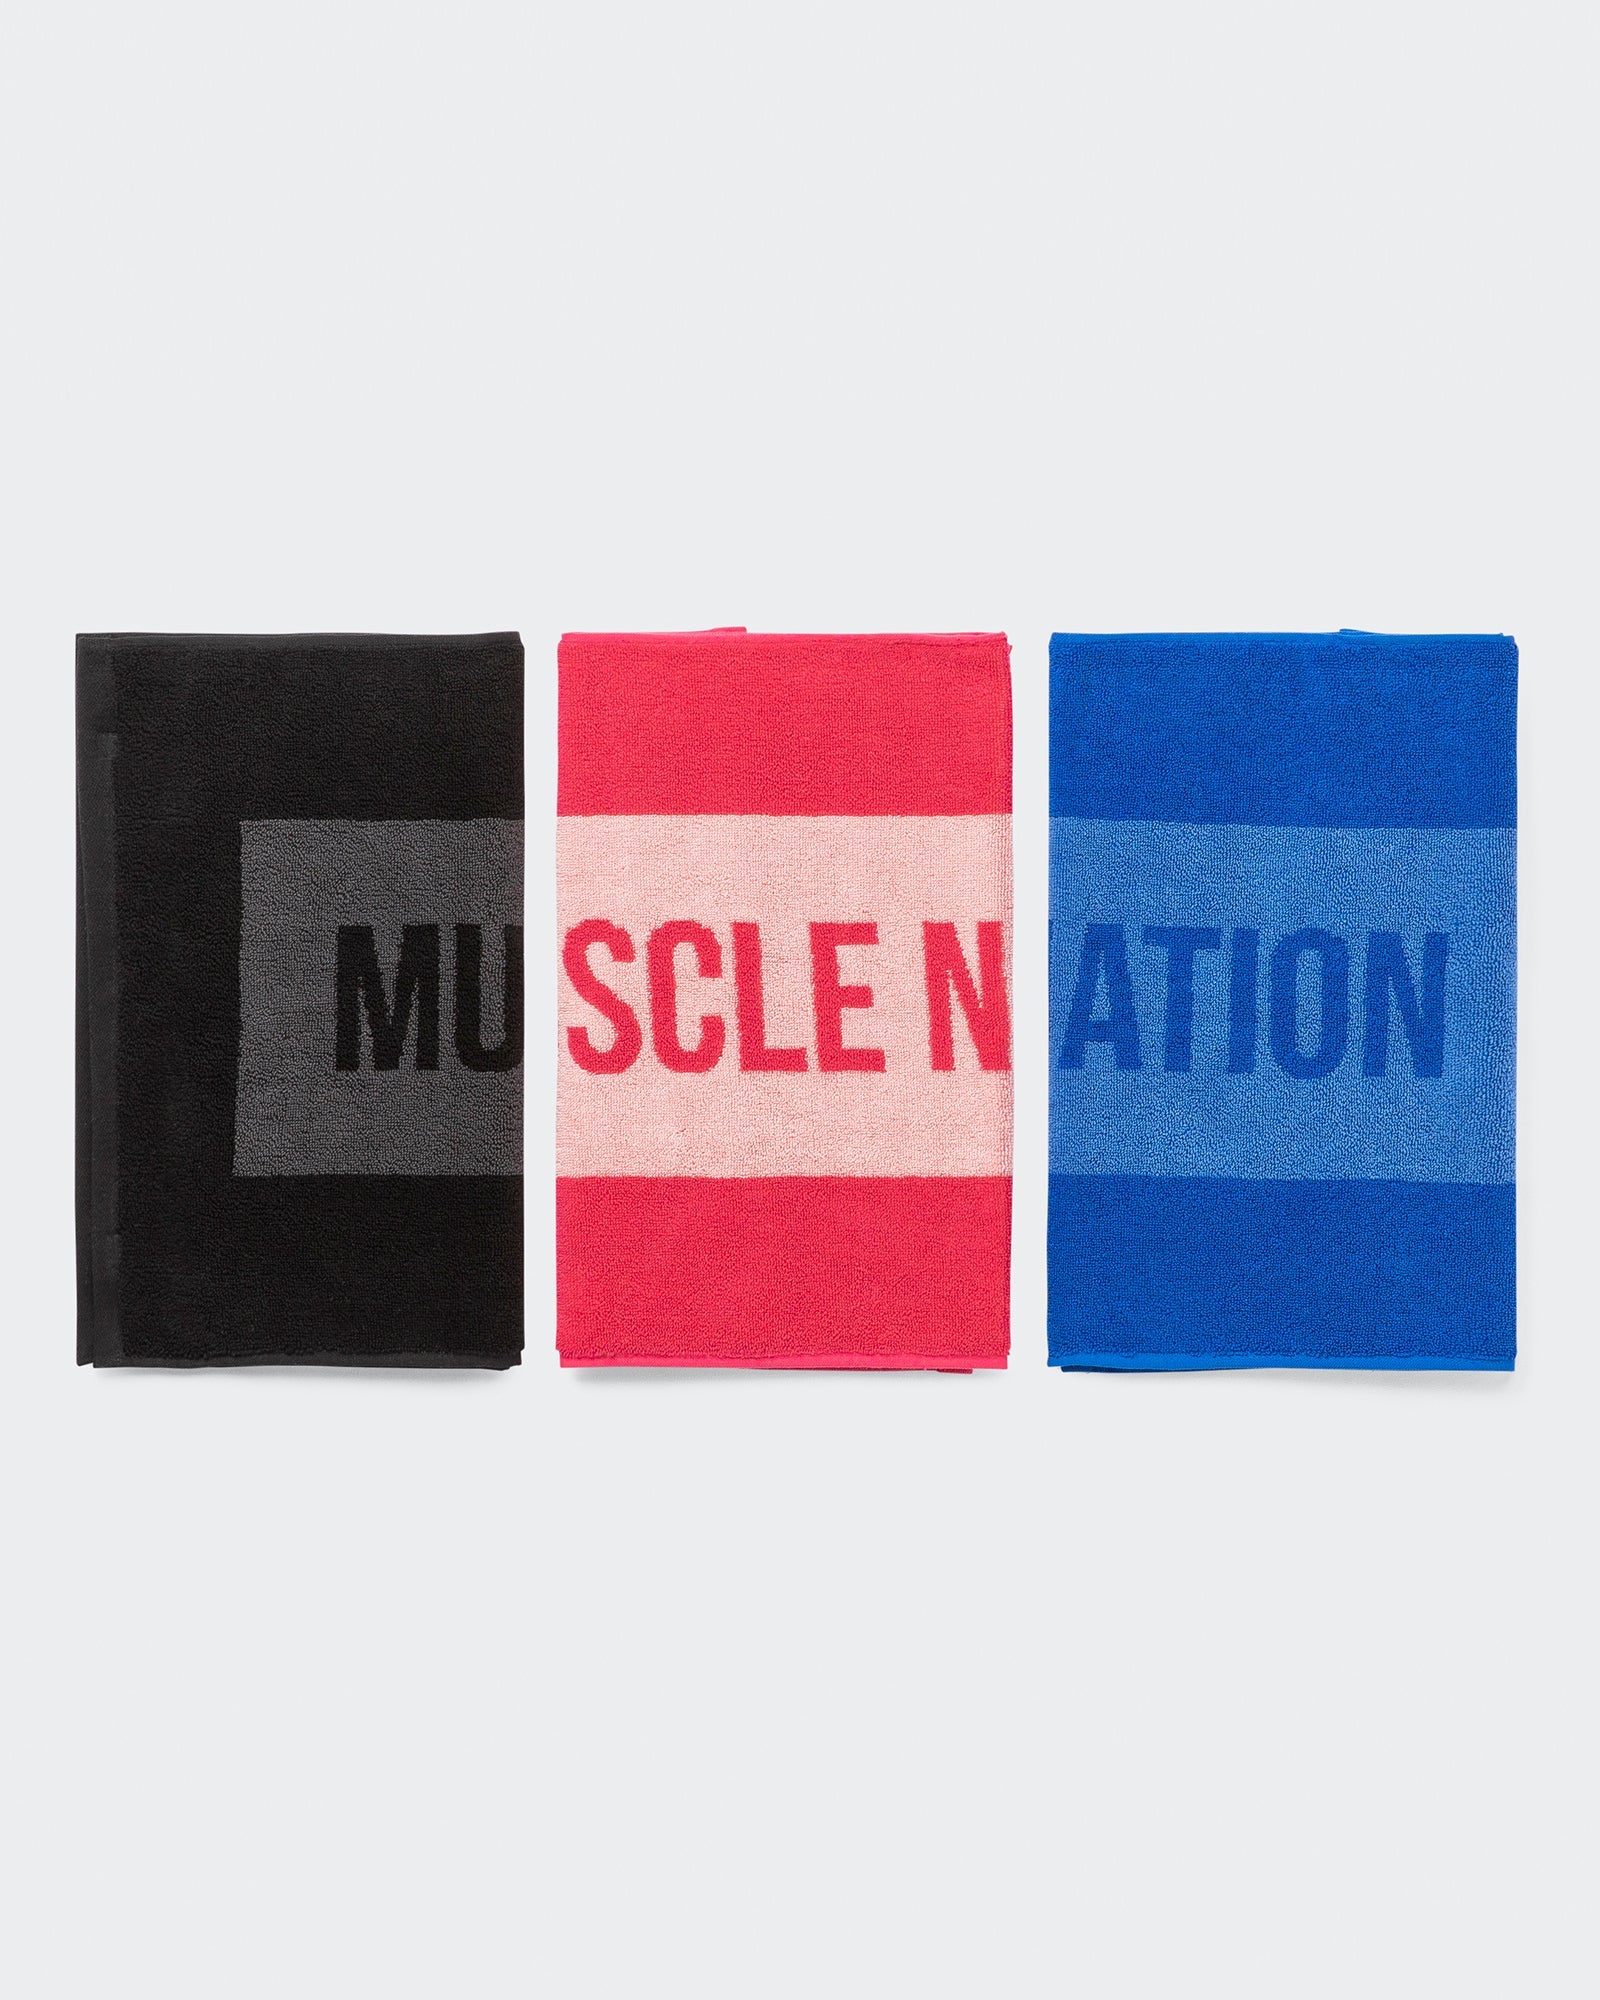 musclenation Gym Towel Default Level Up Sweat Towel (Small) - Sonic Blue/Vista Blue